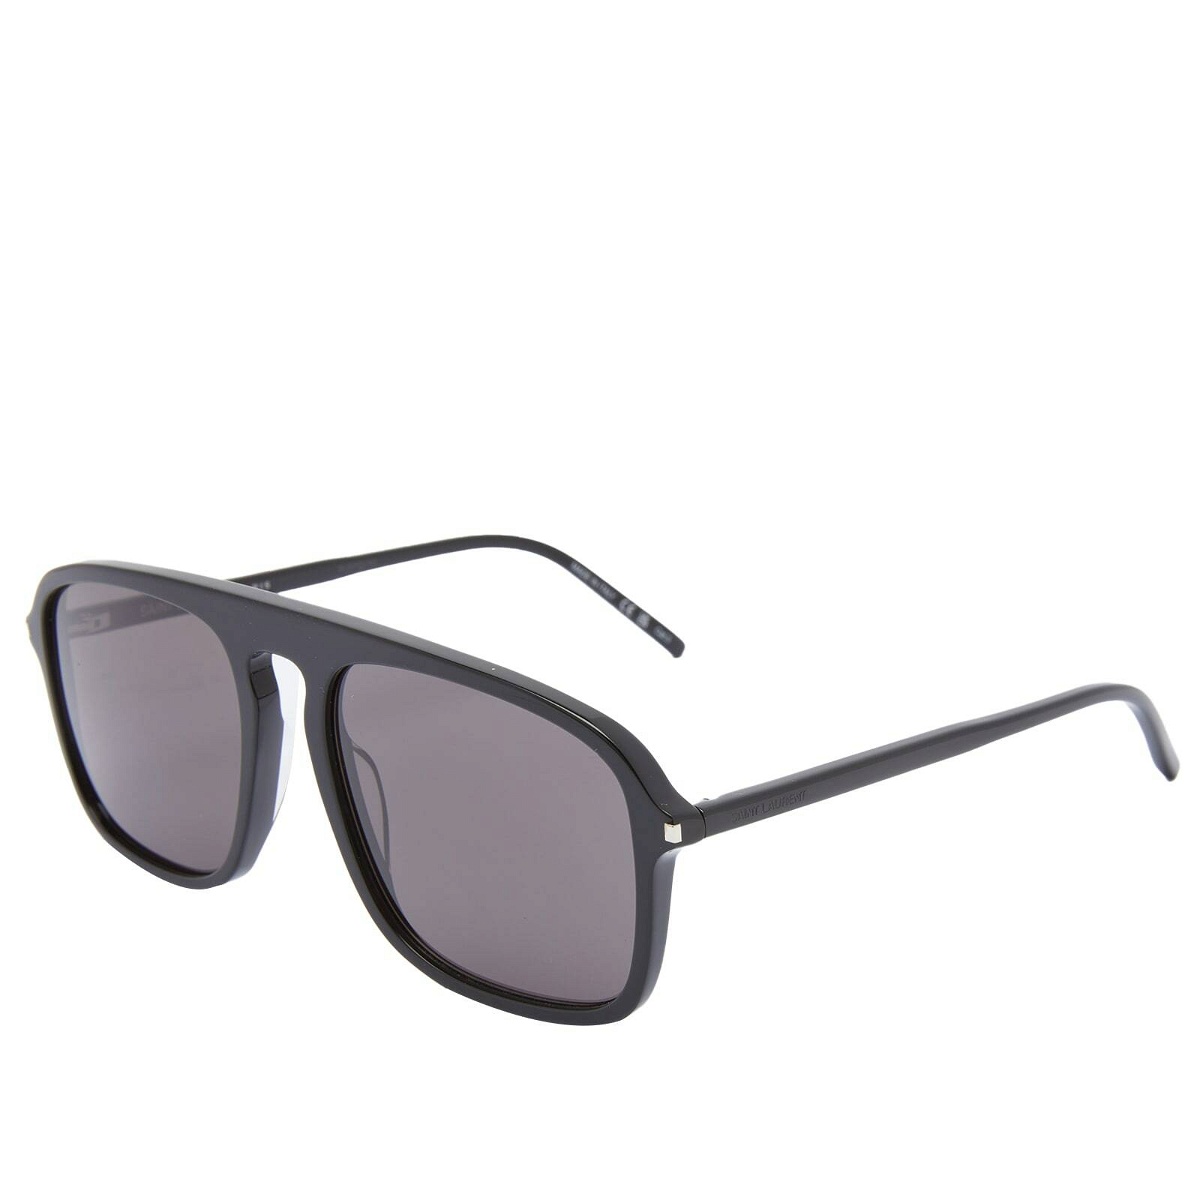 Saint Laurent Sunglasses Men's Saint Laurent SL 590 Sunglasses in Black ...